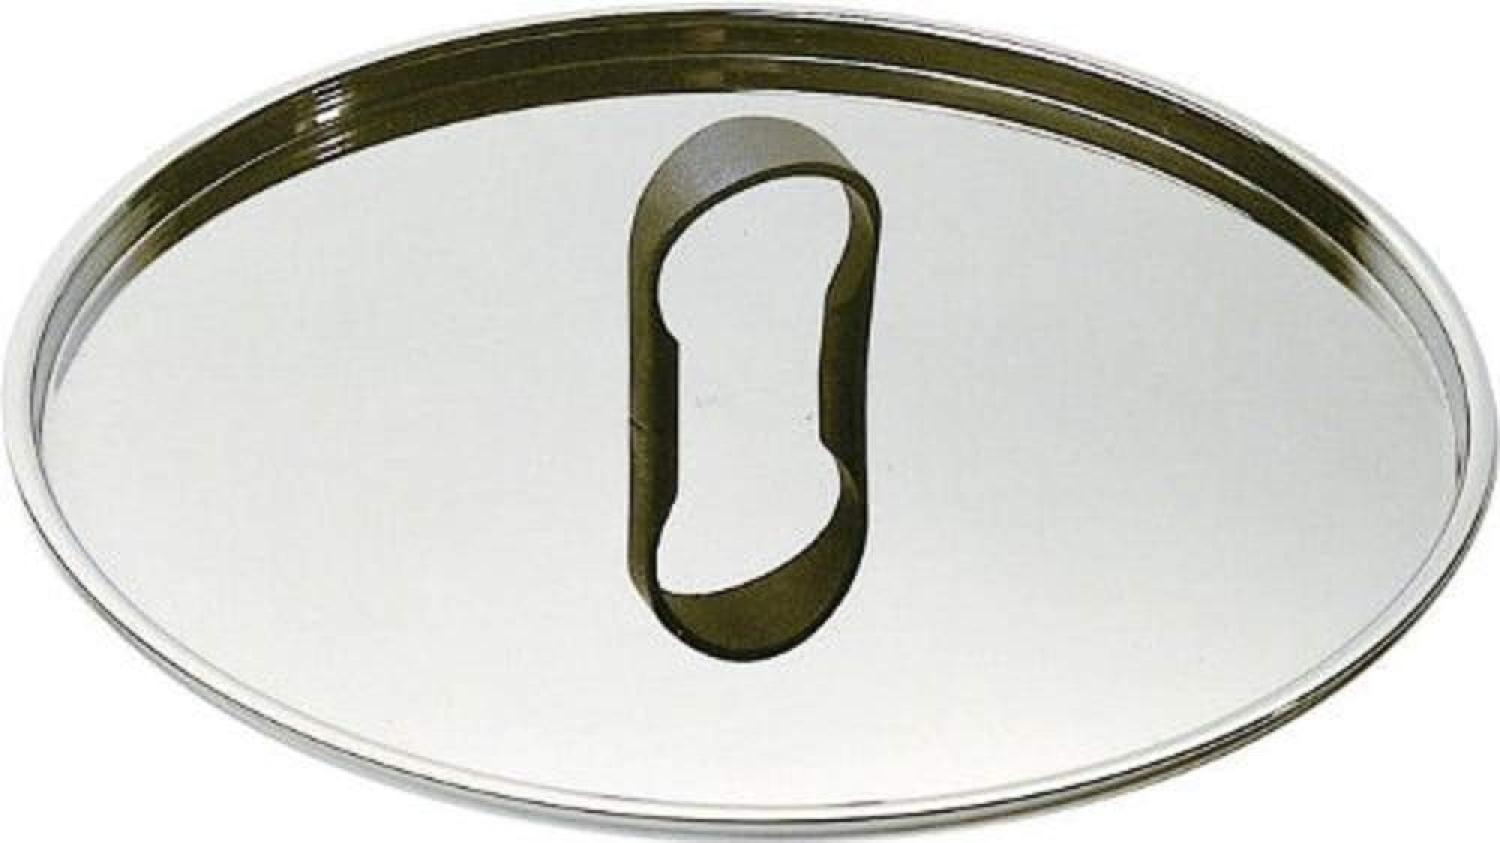 Alessi LA Cintura di Orione“ Deckel aus Edelstahl 18-10 glänzend poliert 14,0cm, 14 cm Bild 1